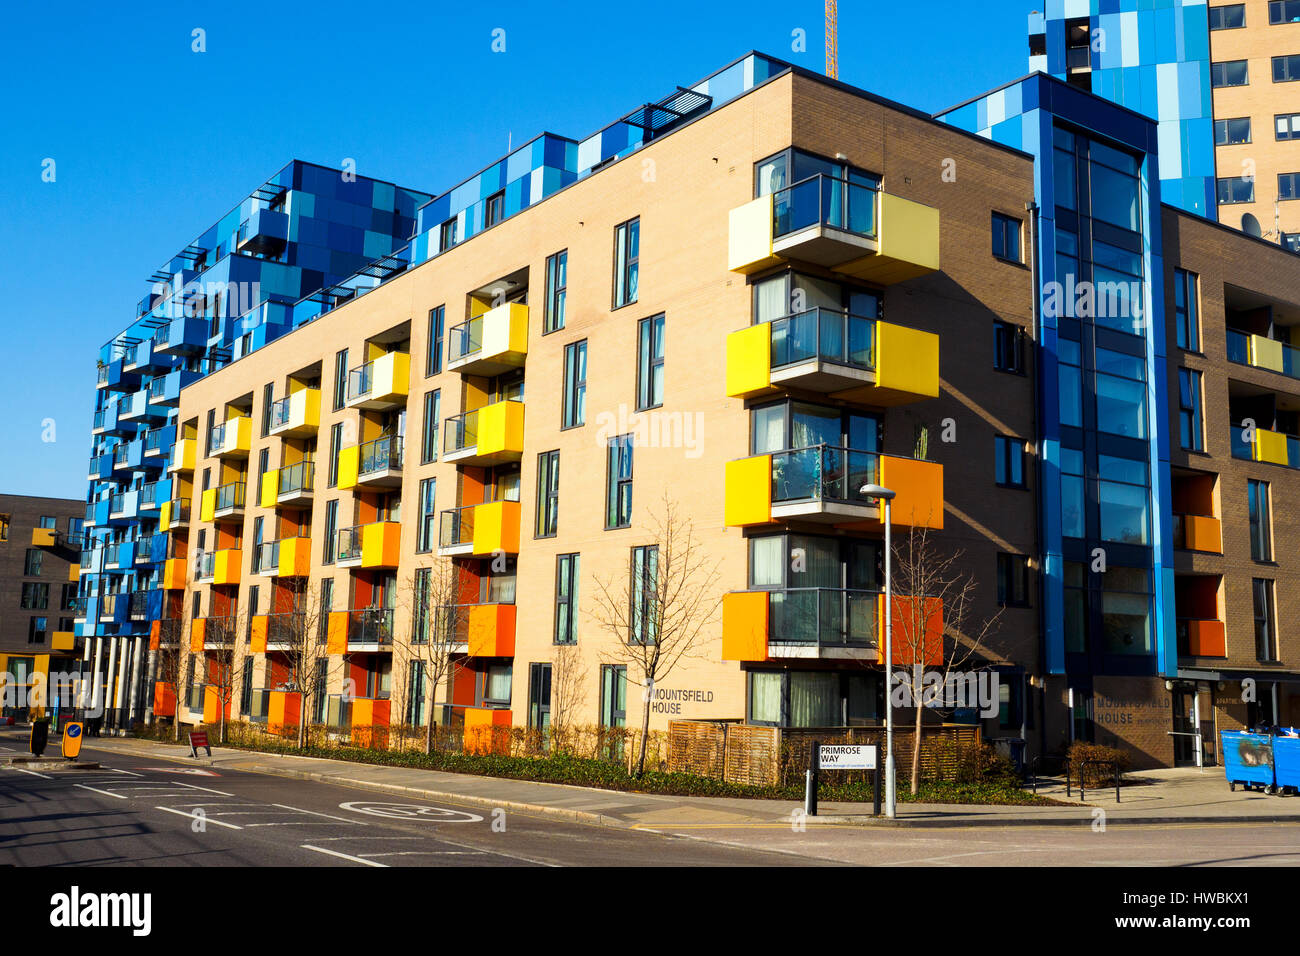 Mountsfield House apartments in Lewisham - London, England Stock Photo